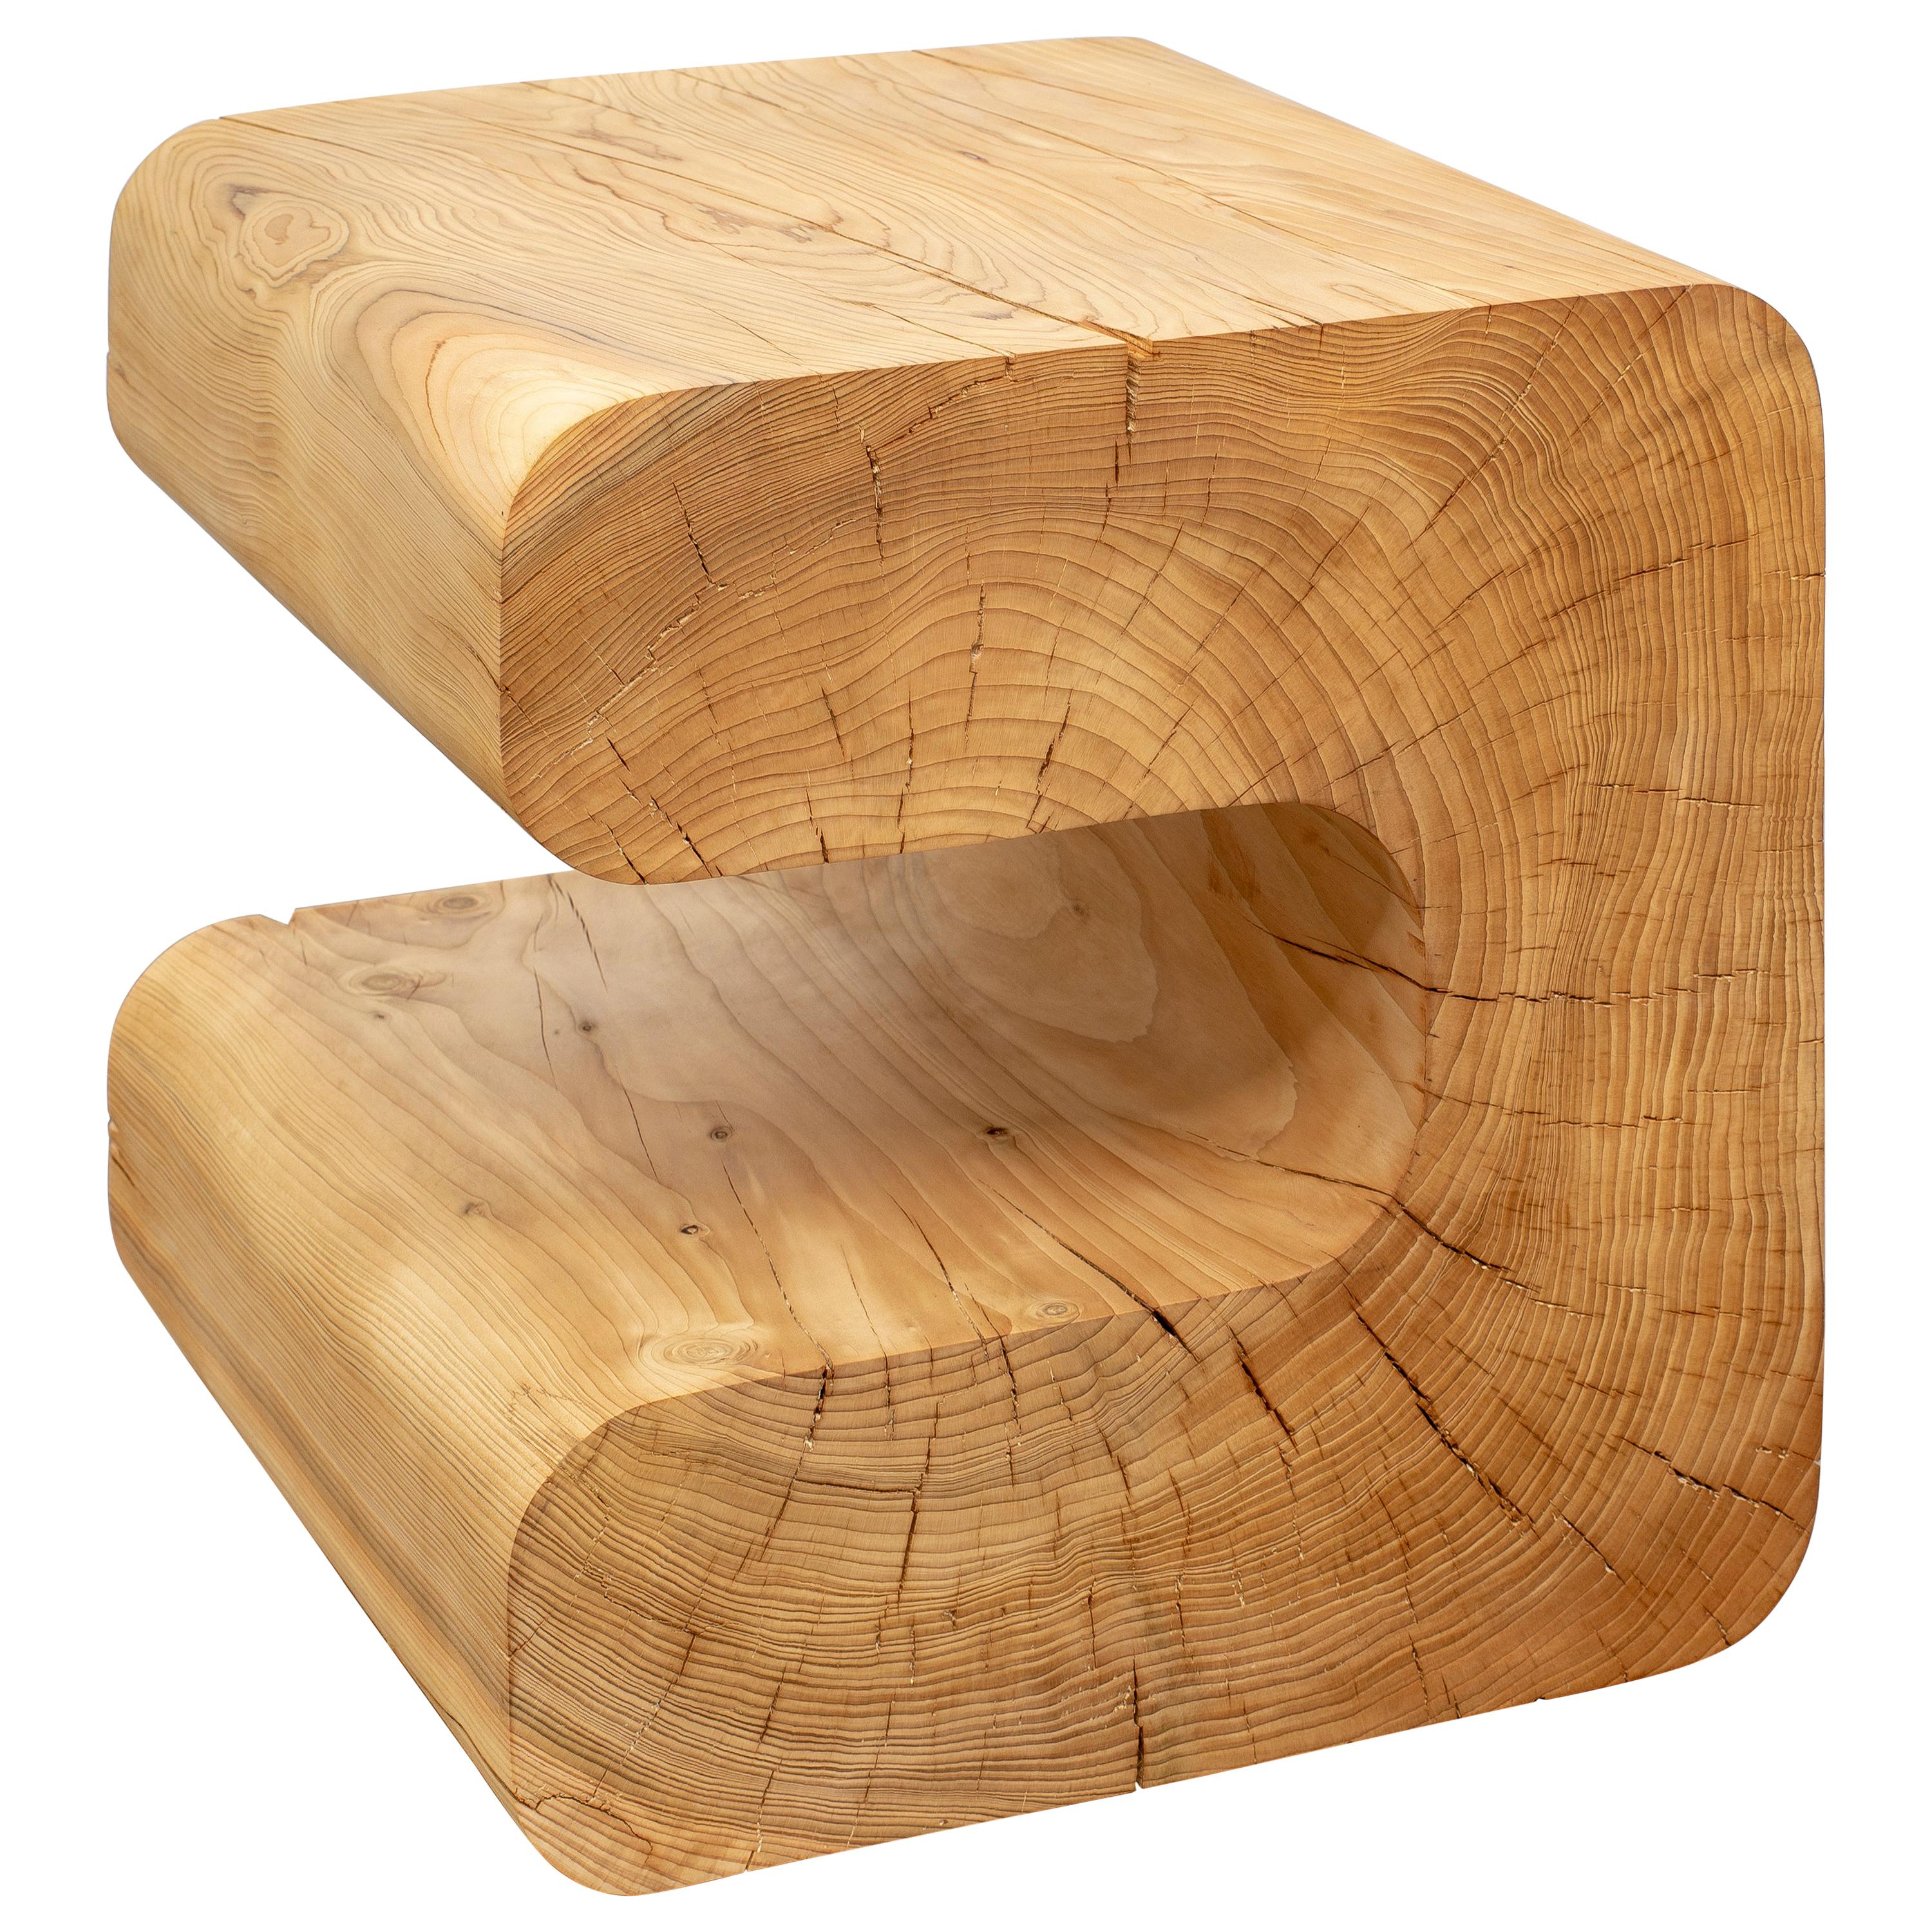 Untitled Deodar Cedar Sculptural Side Table by Christopher Norman